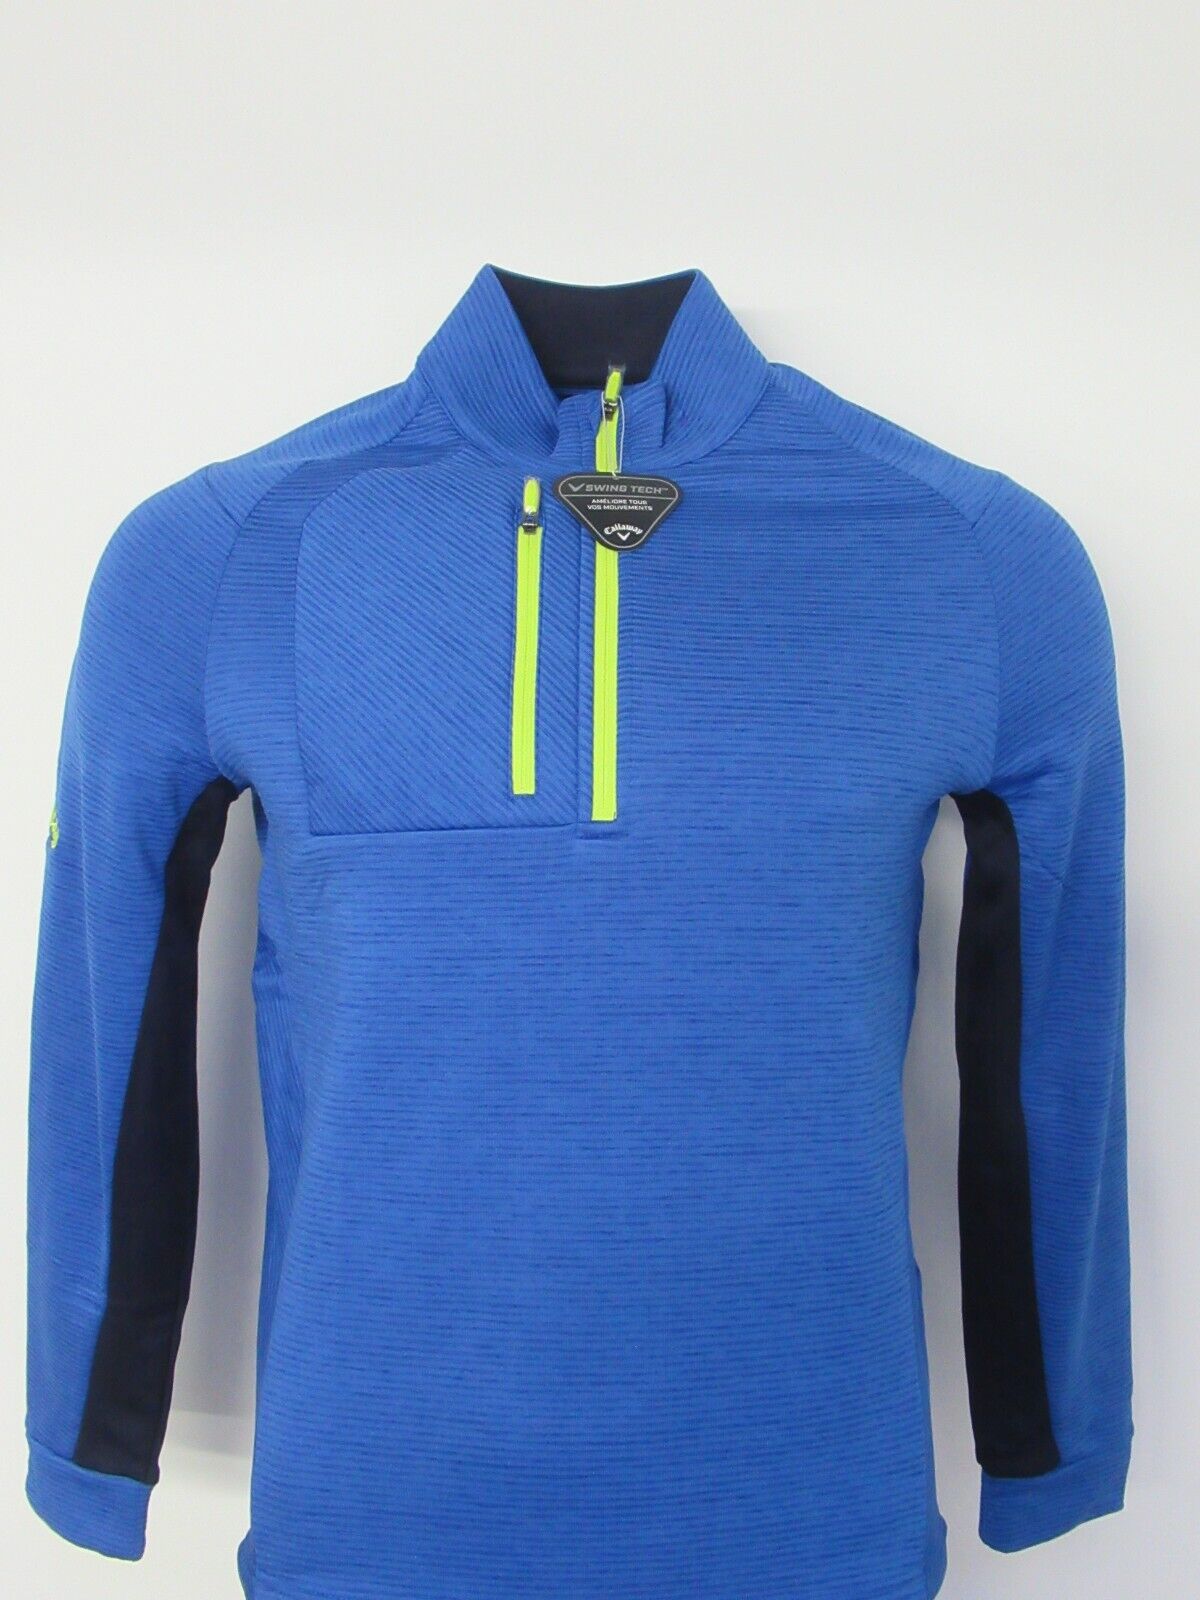 callaway weather series thermal 1/4 zip sweater mazarine blue uk size small